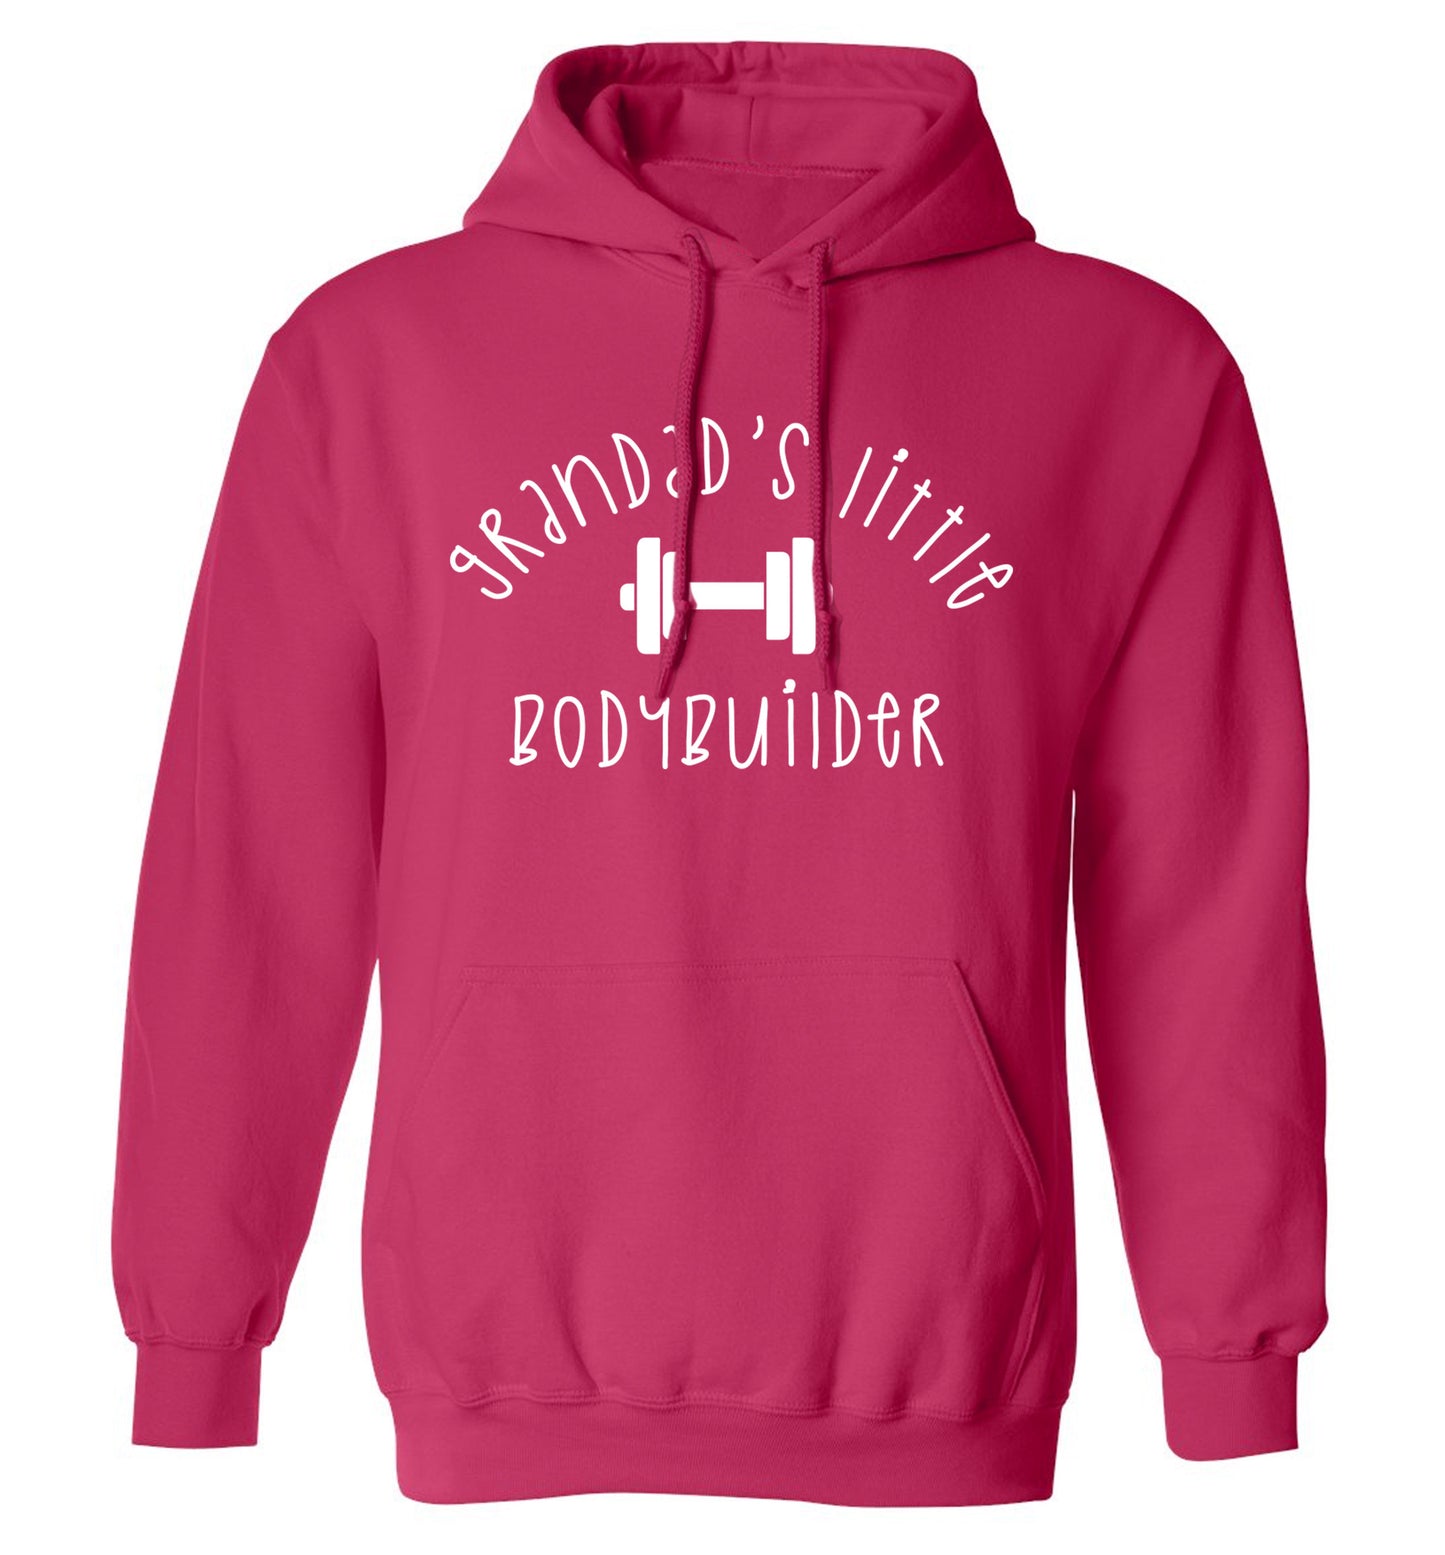 Grandad's little bodybuilder adults unisex pink hoodie 2XL